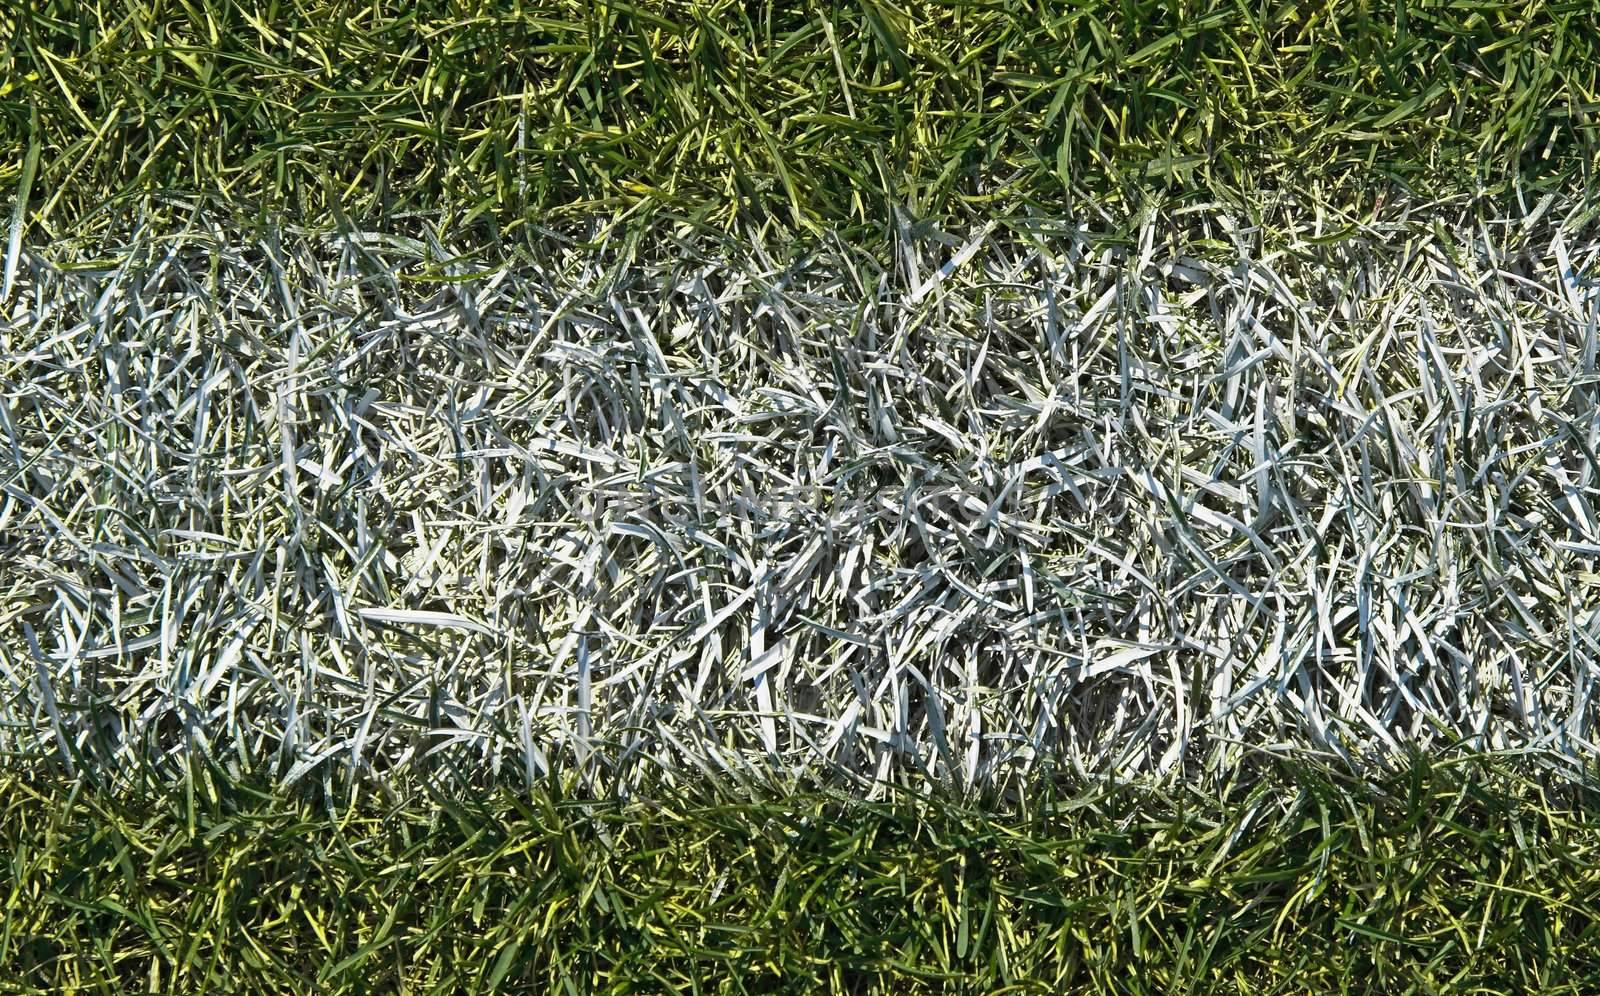 Boundary line of a playing field closeup by anikasalsera